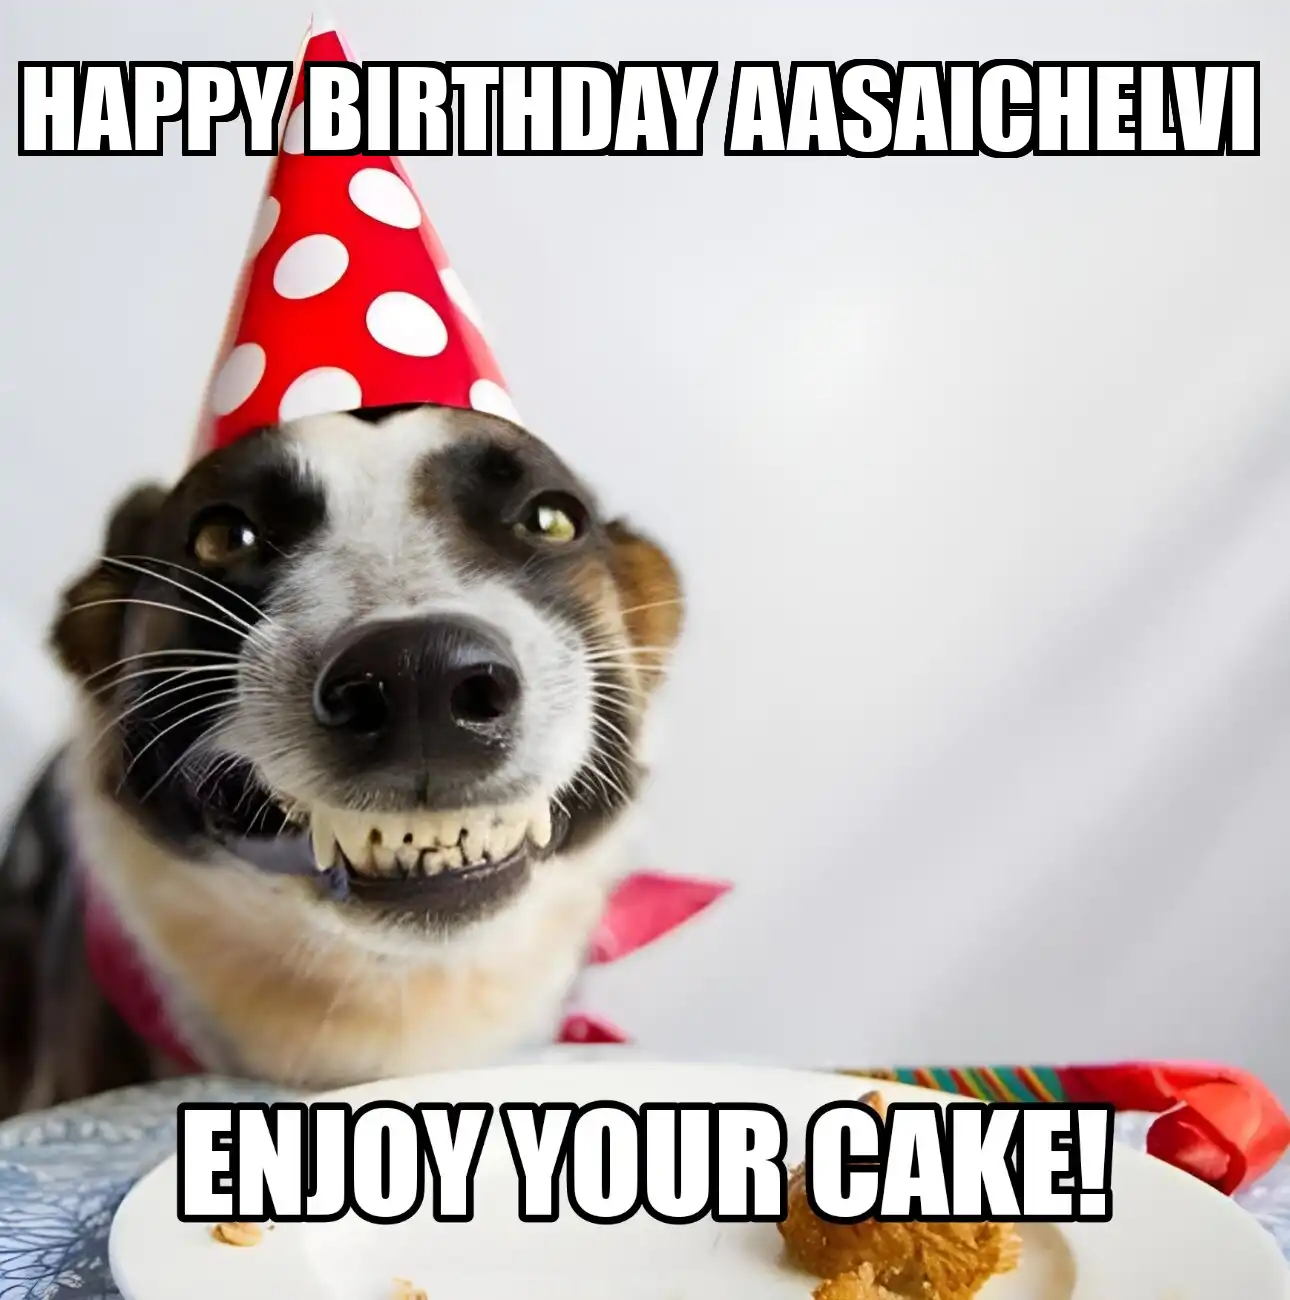 Happy Birthday Aasaichelvi Enjoy Your Cake Dog Meme